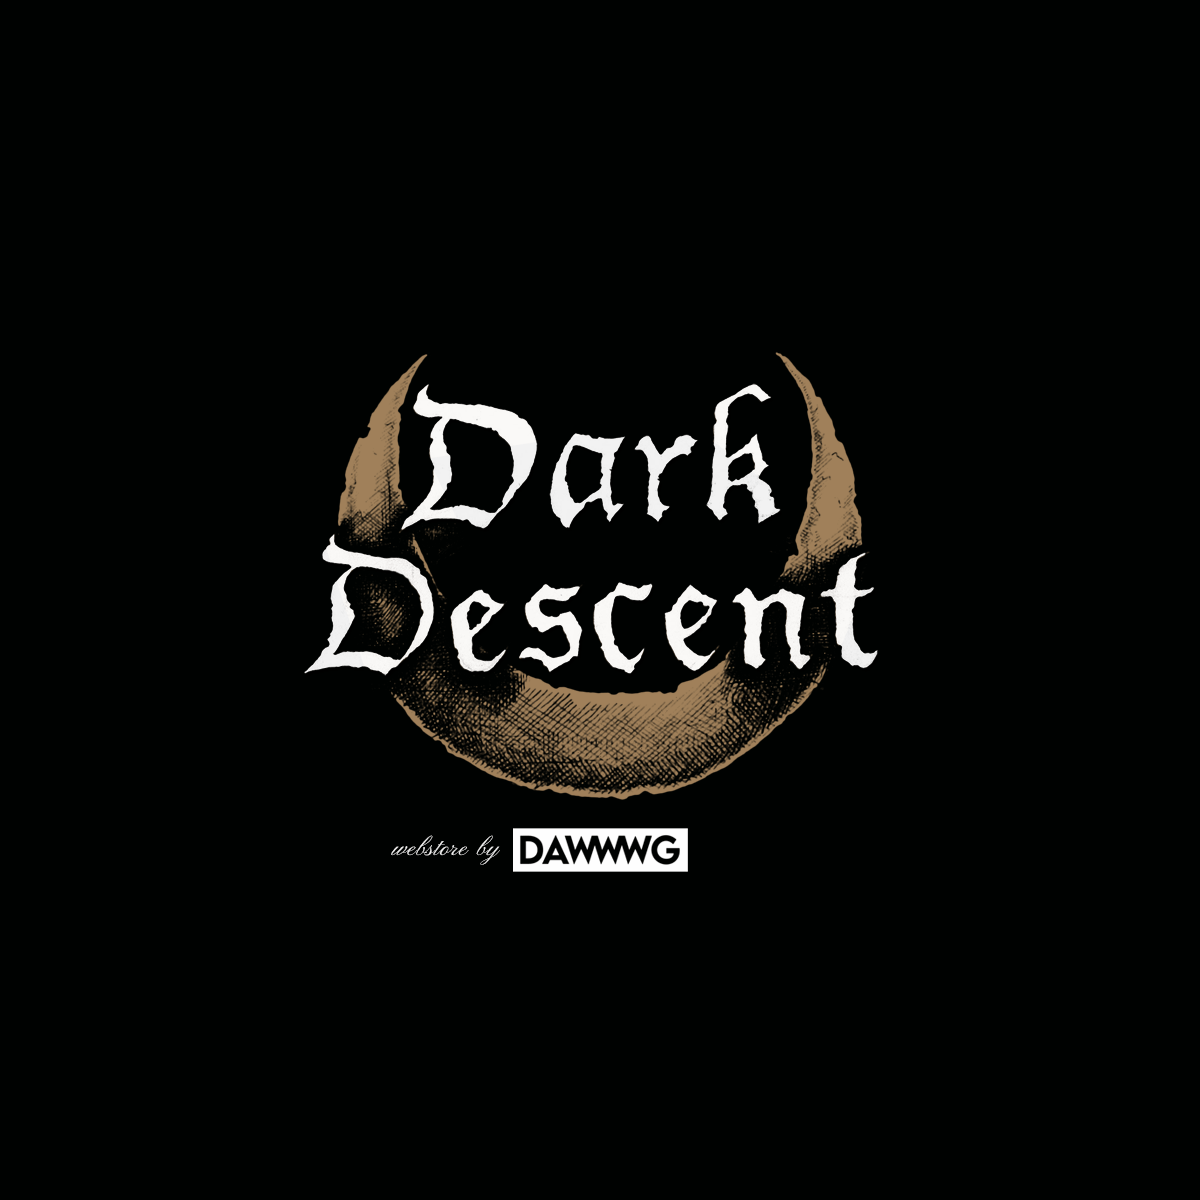 (c) Darkdescentrecords.com